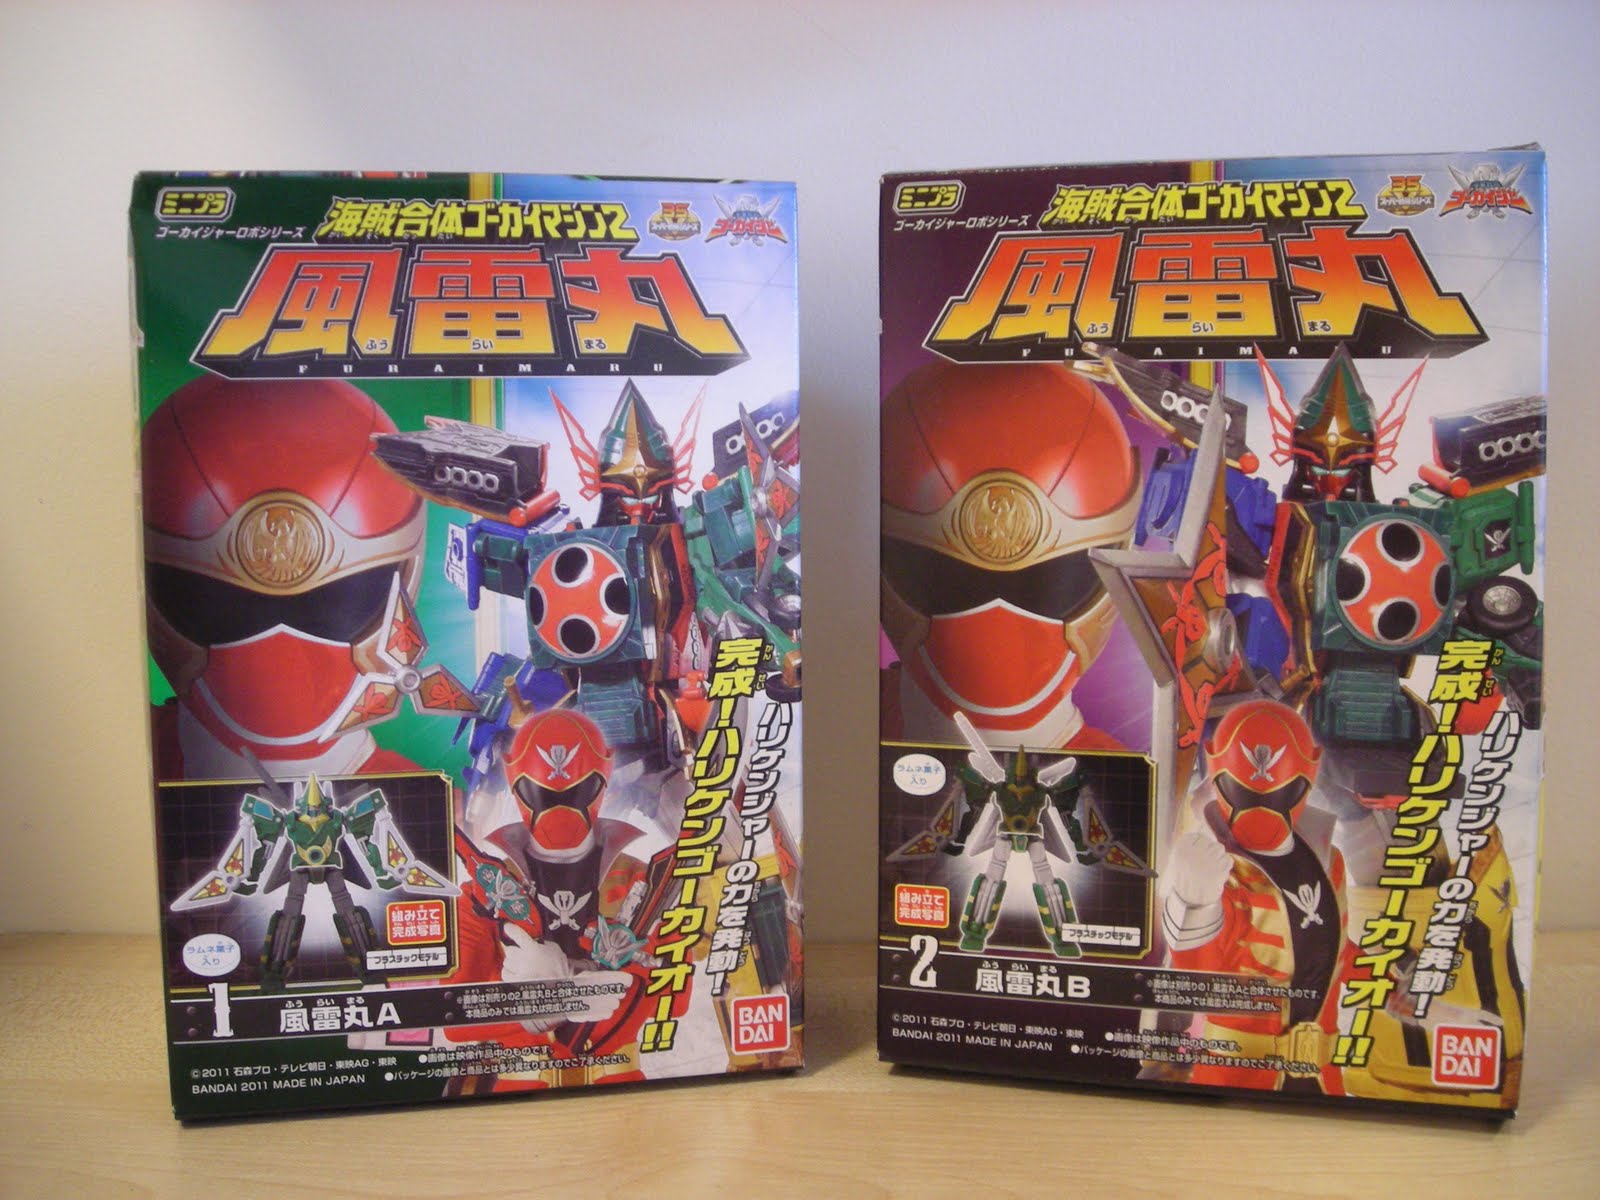 My Shiny Toy Robots: Anime REVIEW: Kore wa Zombie Desu ka?